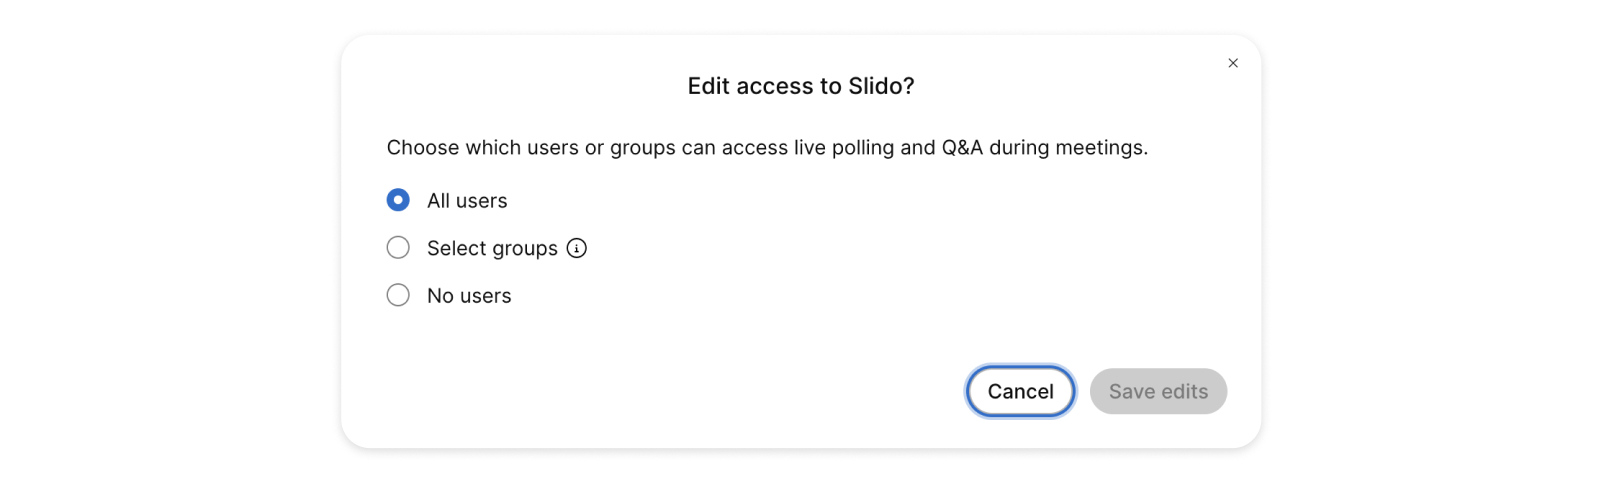 Edit access to Slido